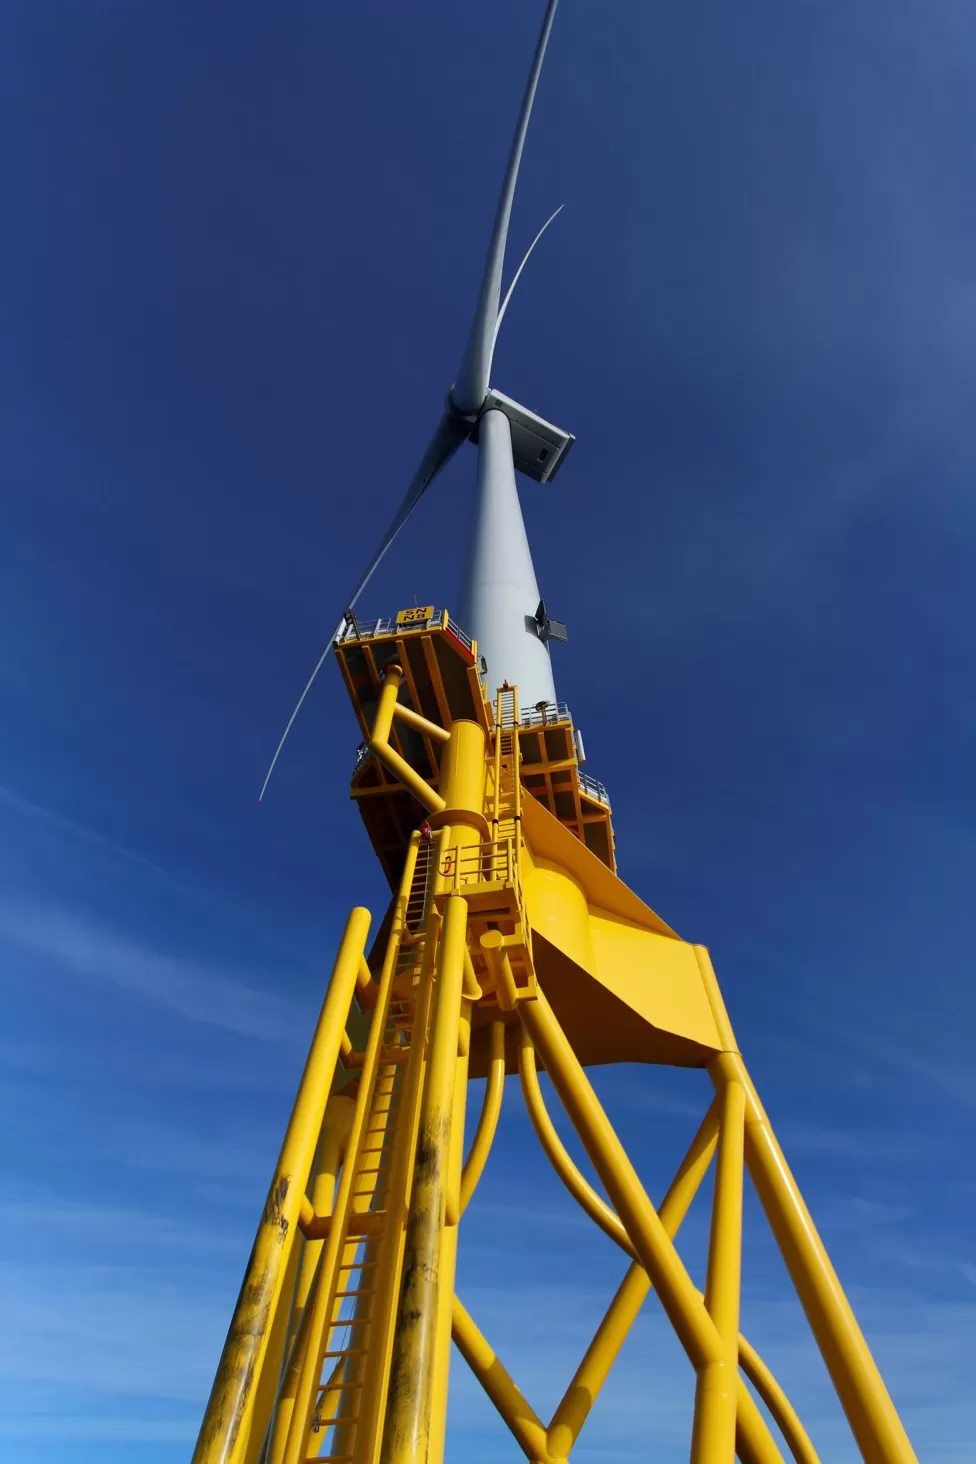 Indians at UK - Scotland’s Biggest Offshore Wind Farm